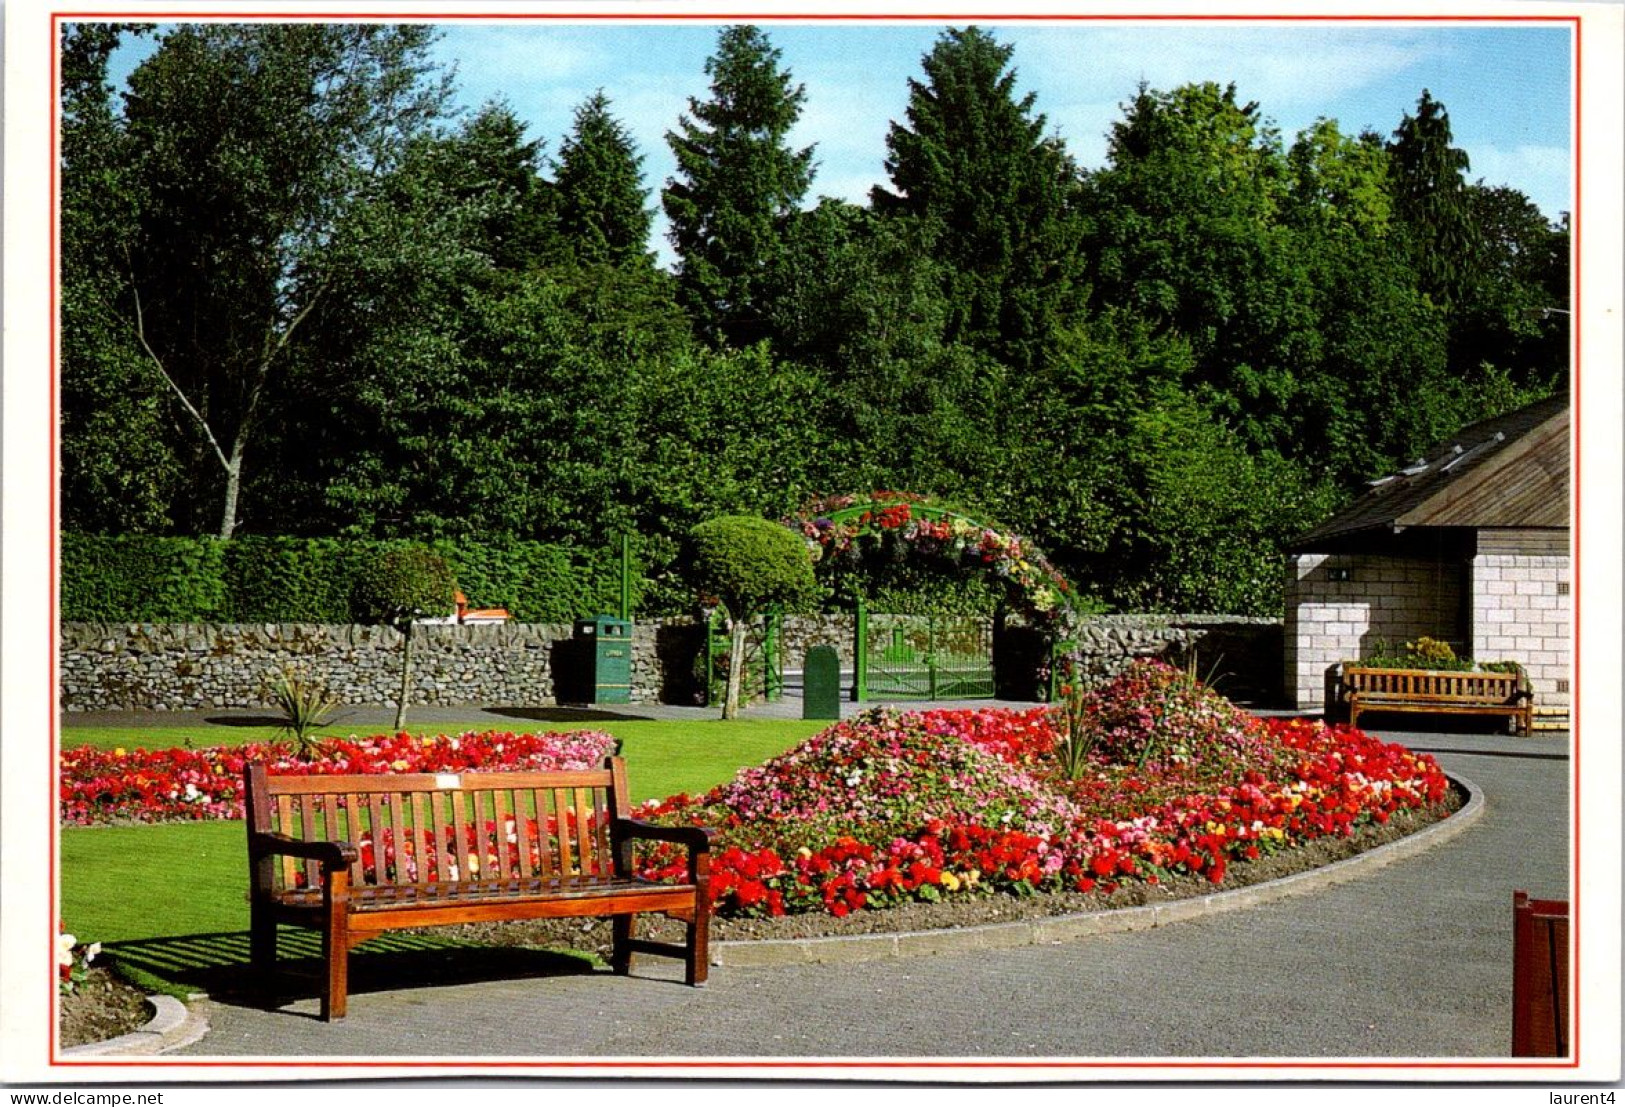 (1 Q 41) UK - Moffat (2 Postcards) - Dumfriesshire